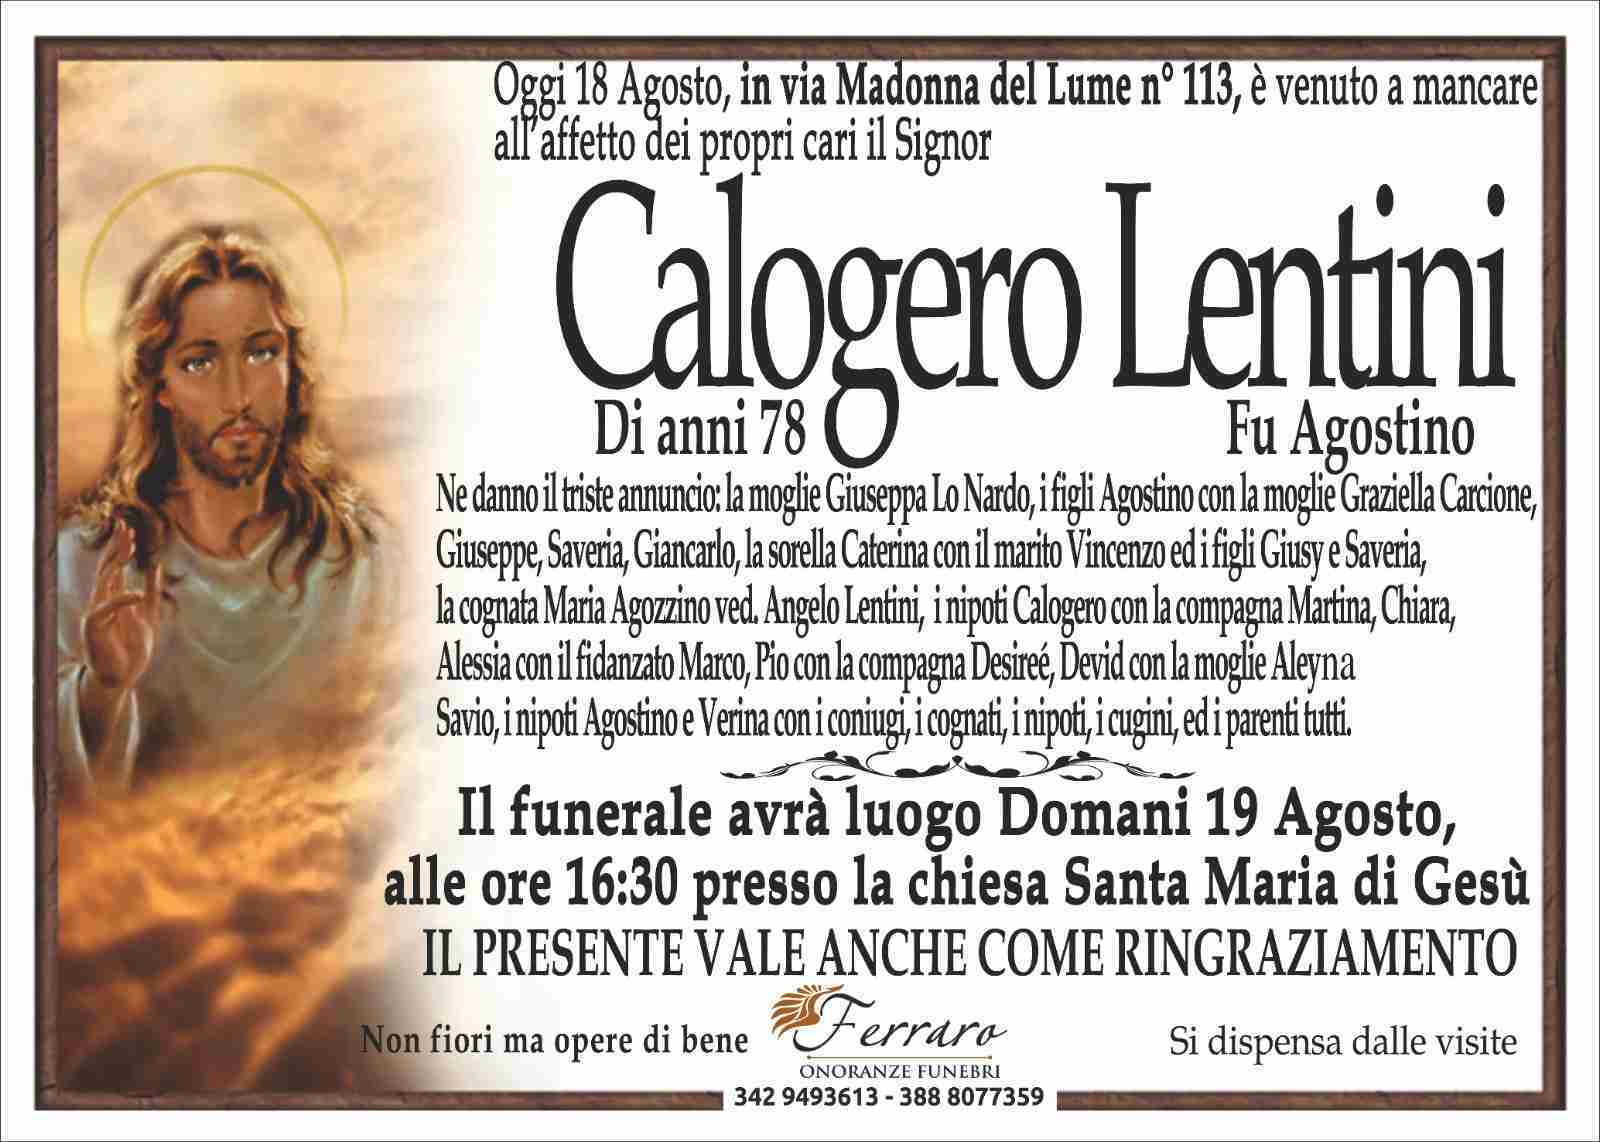 Calogero Lentini